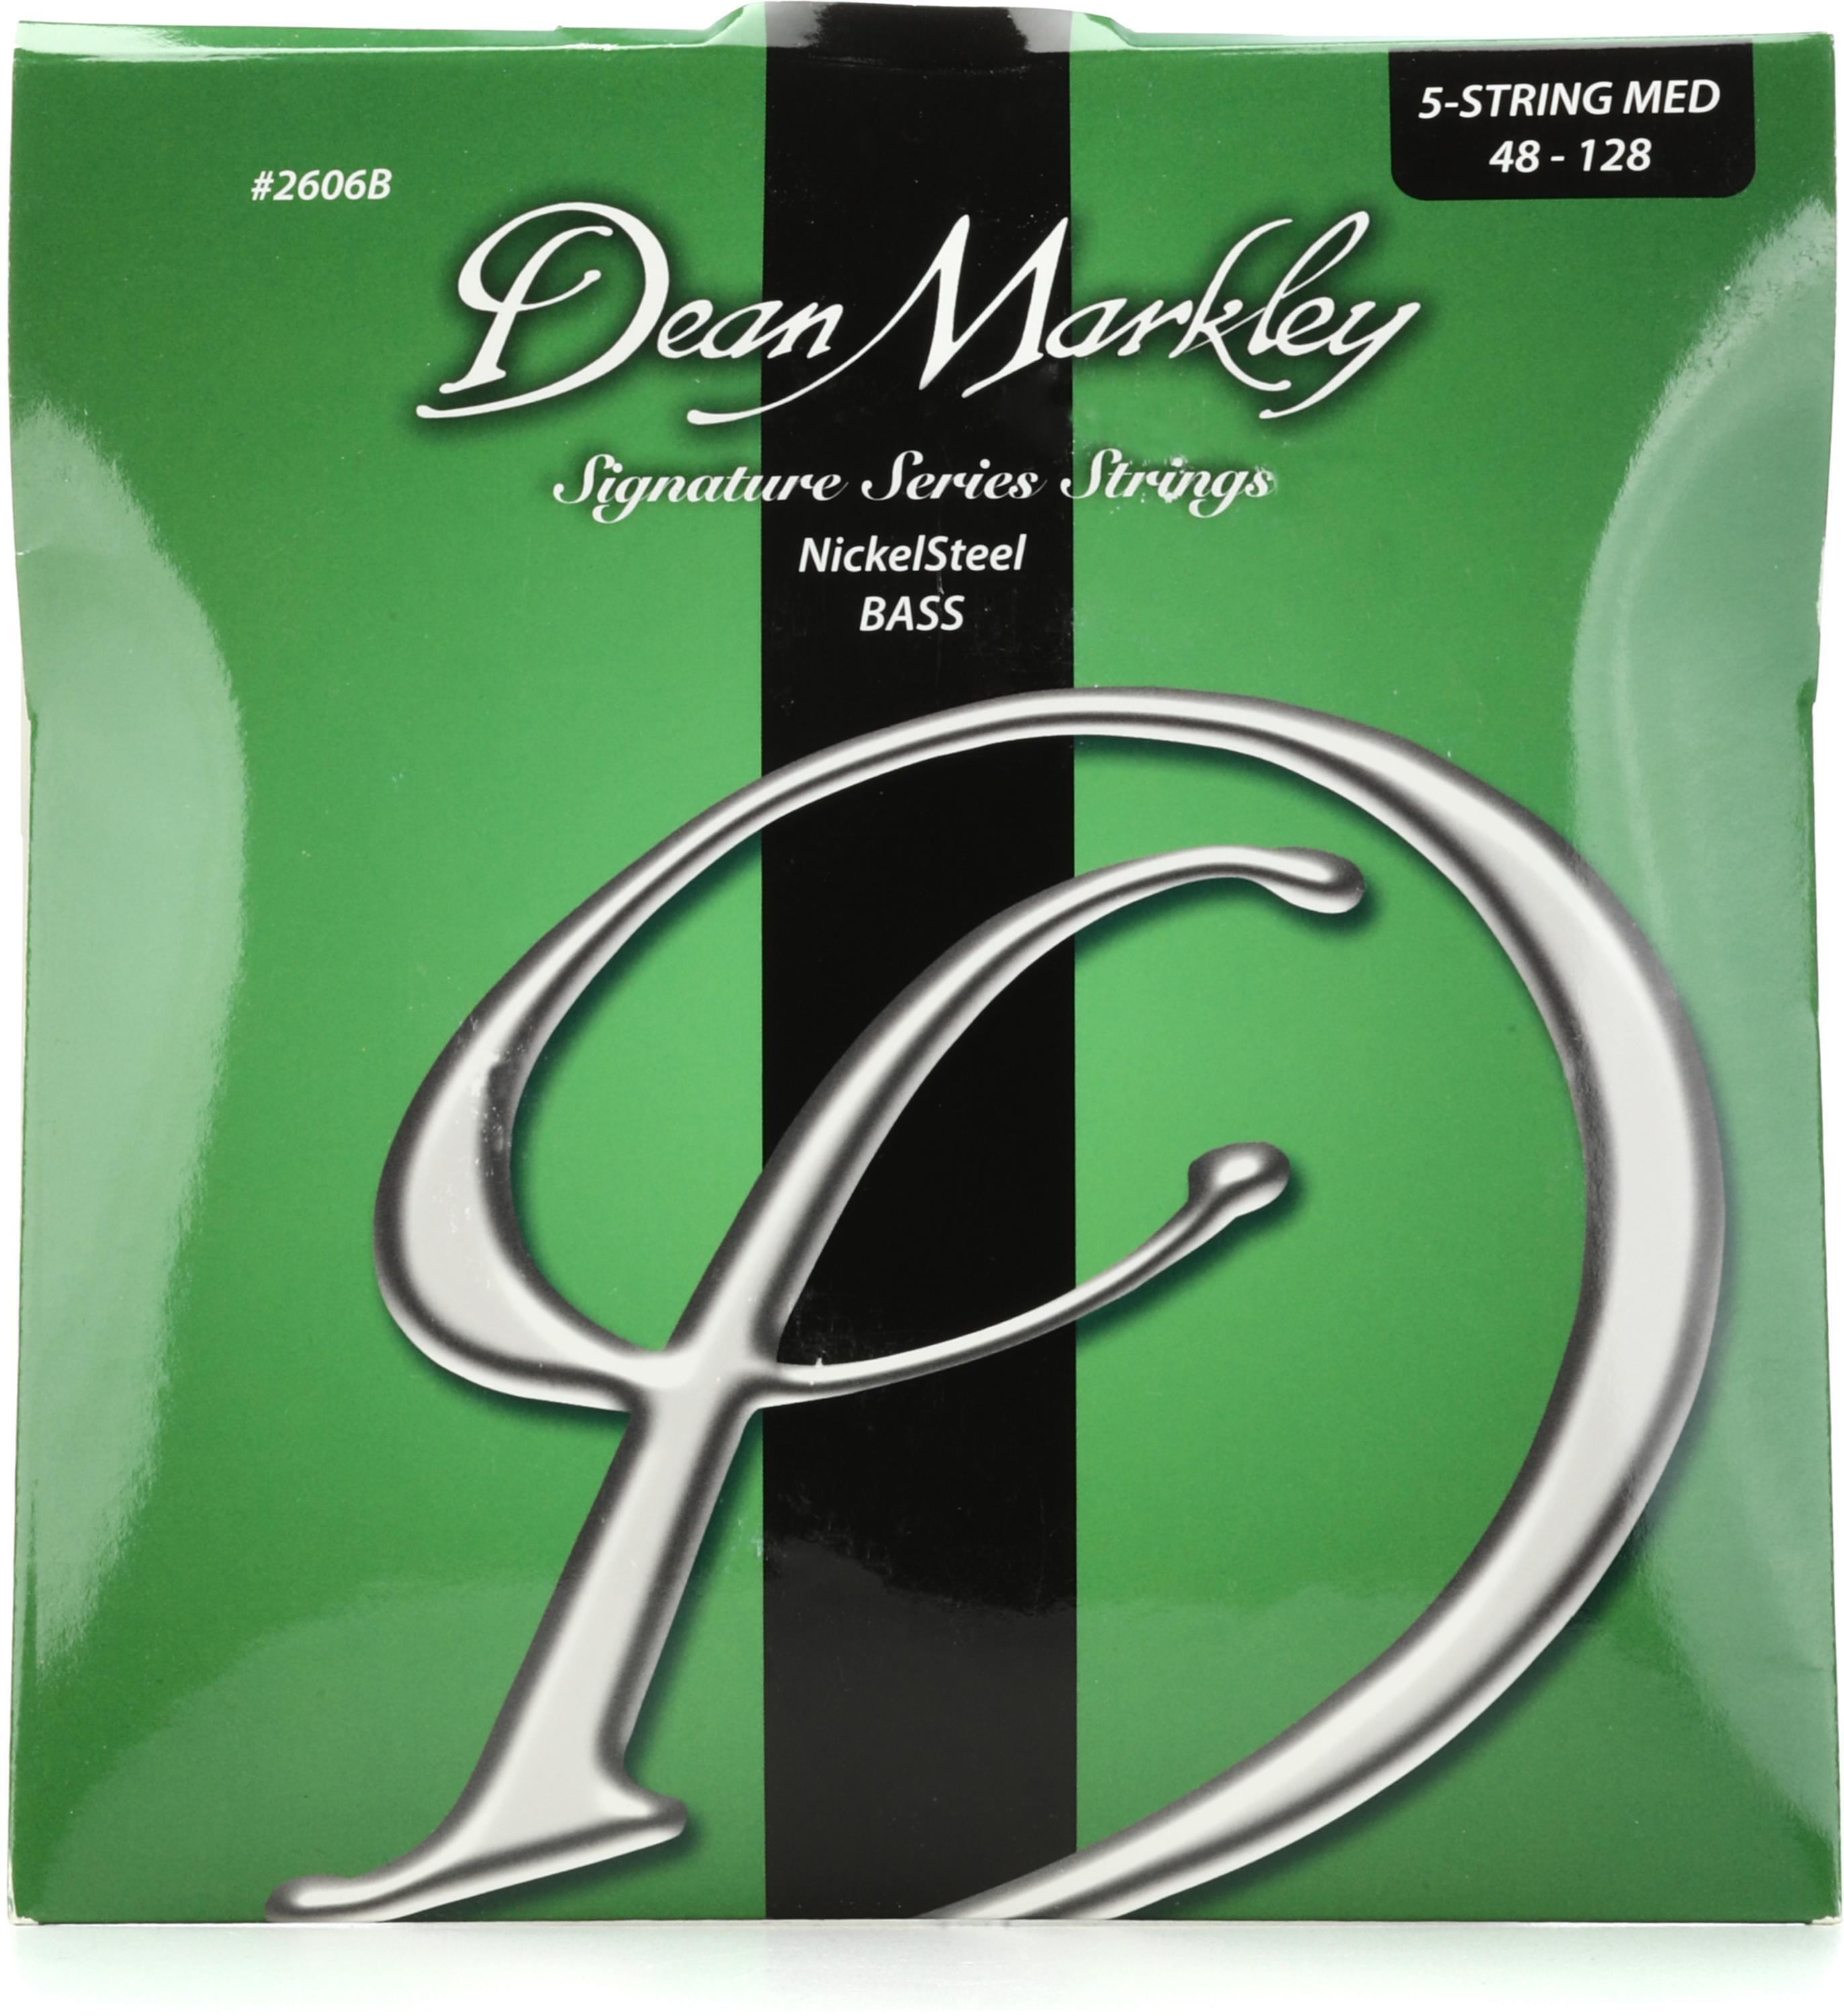 Bundled Item: Dean Markley NickelSteel Signature Series Bass Guitar Strings - Medium, 5-string .048-.128